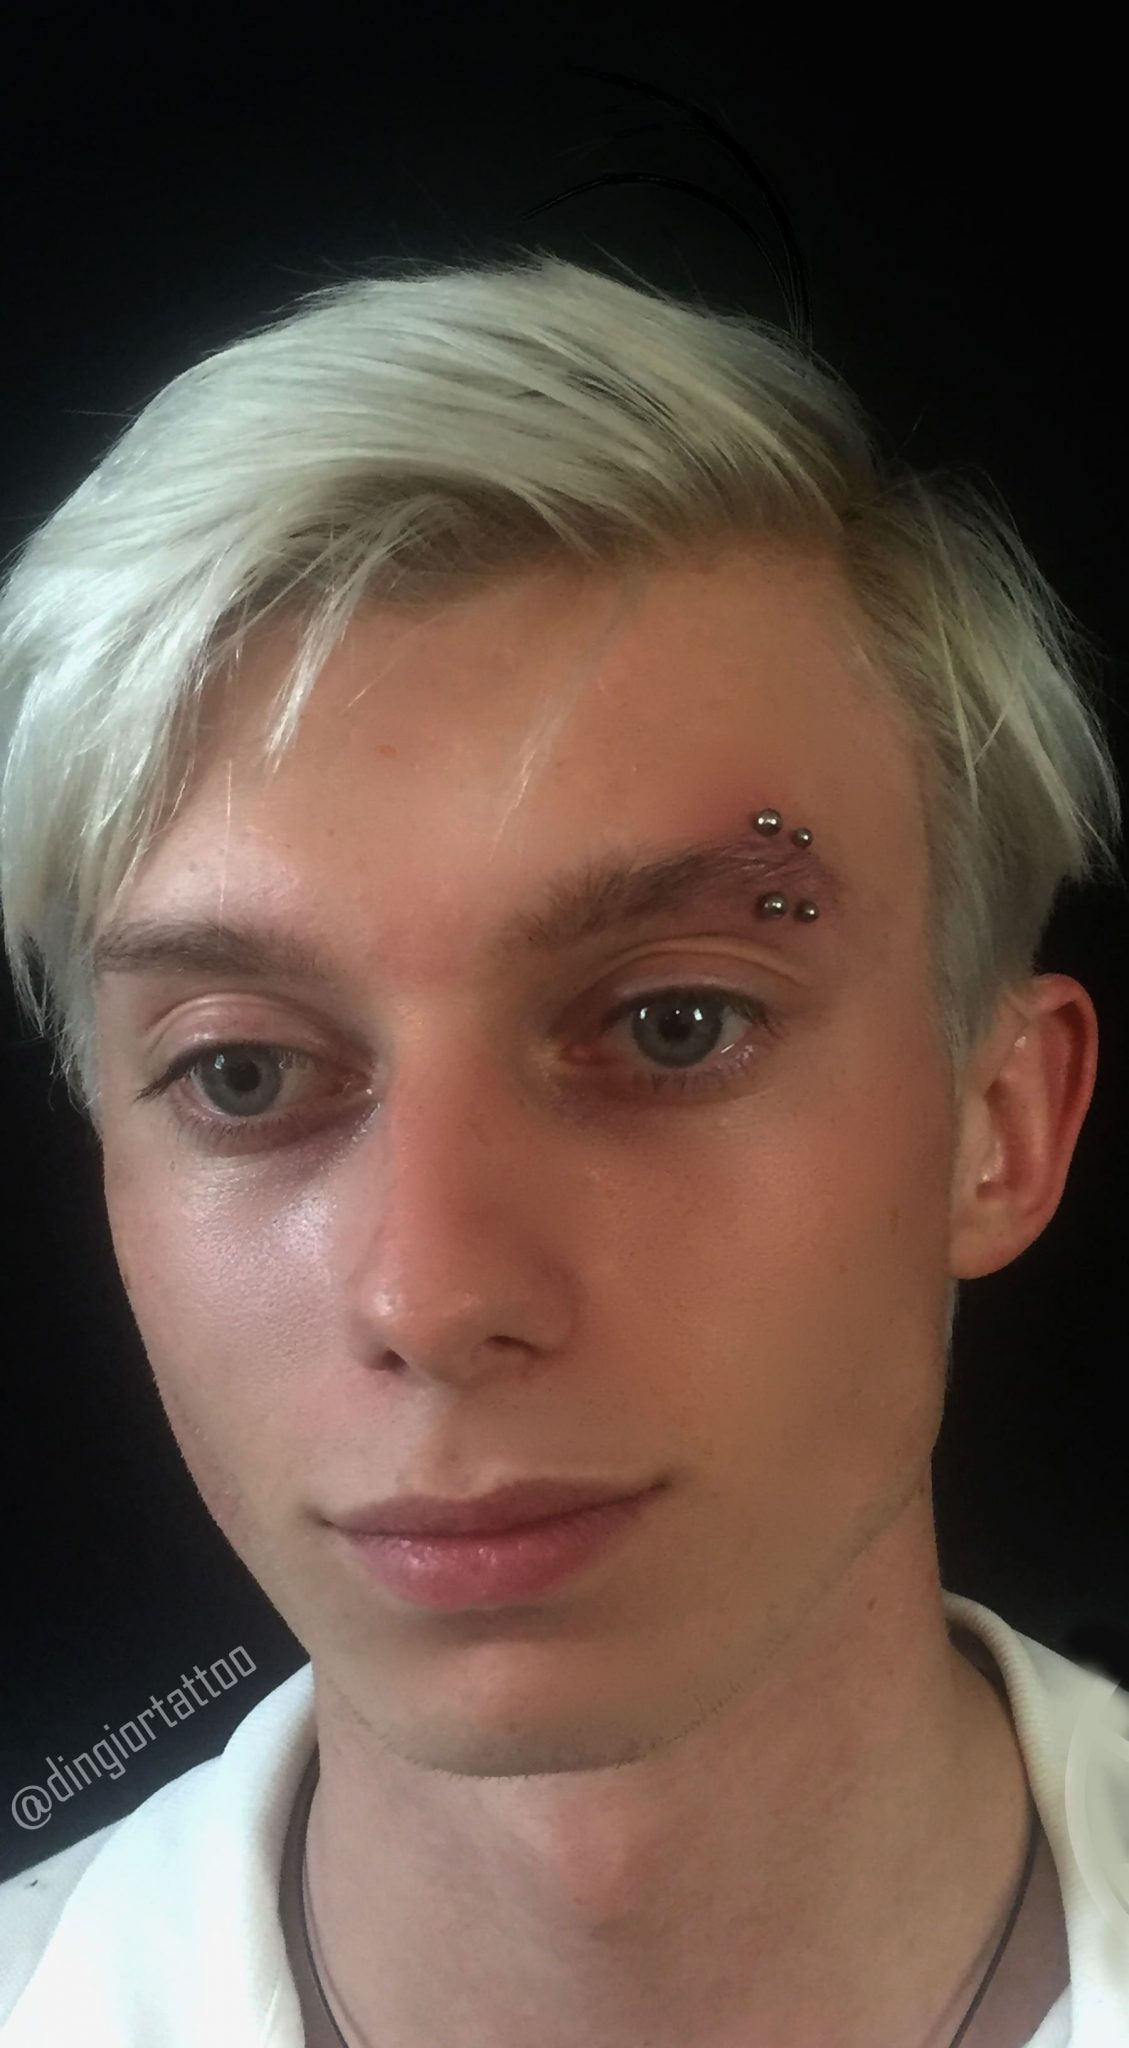 eyebrow multi-piercing